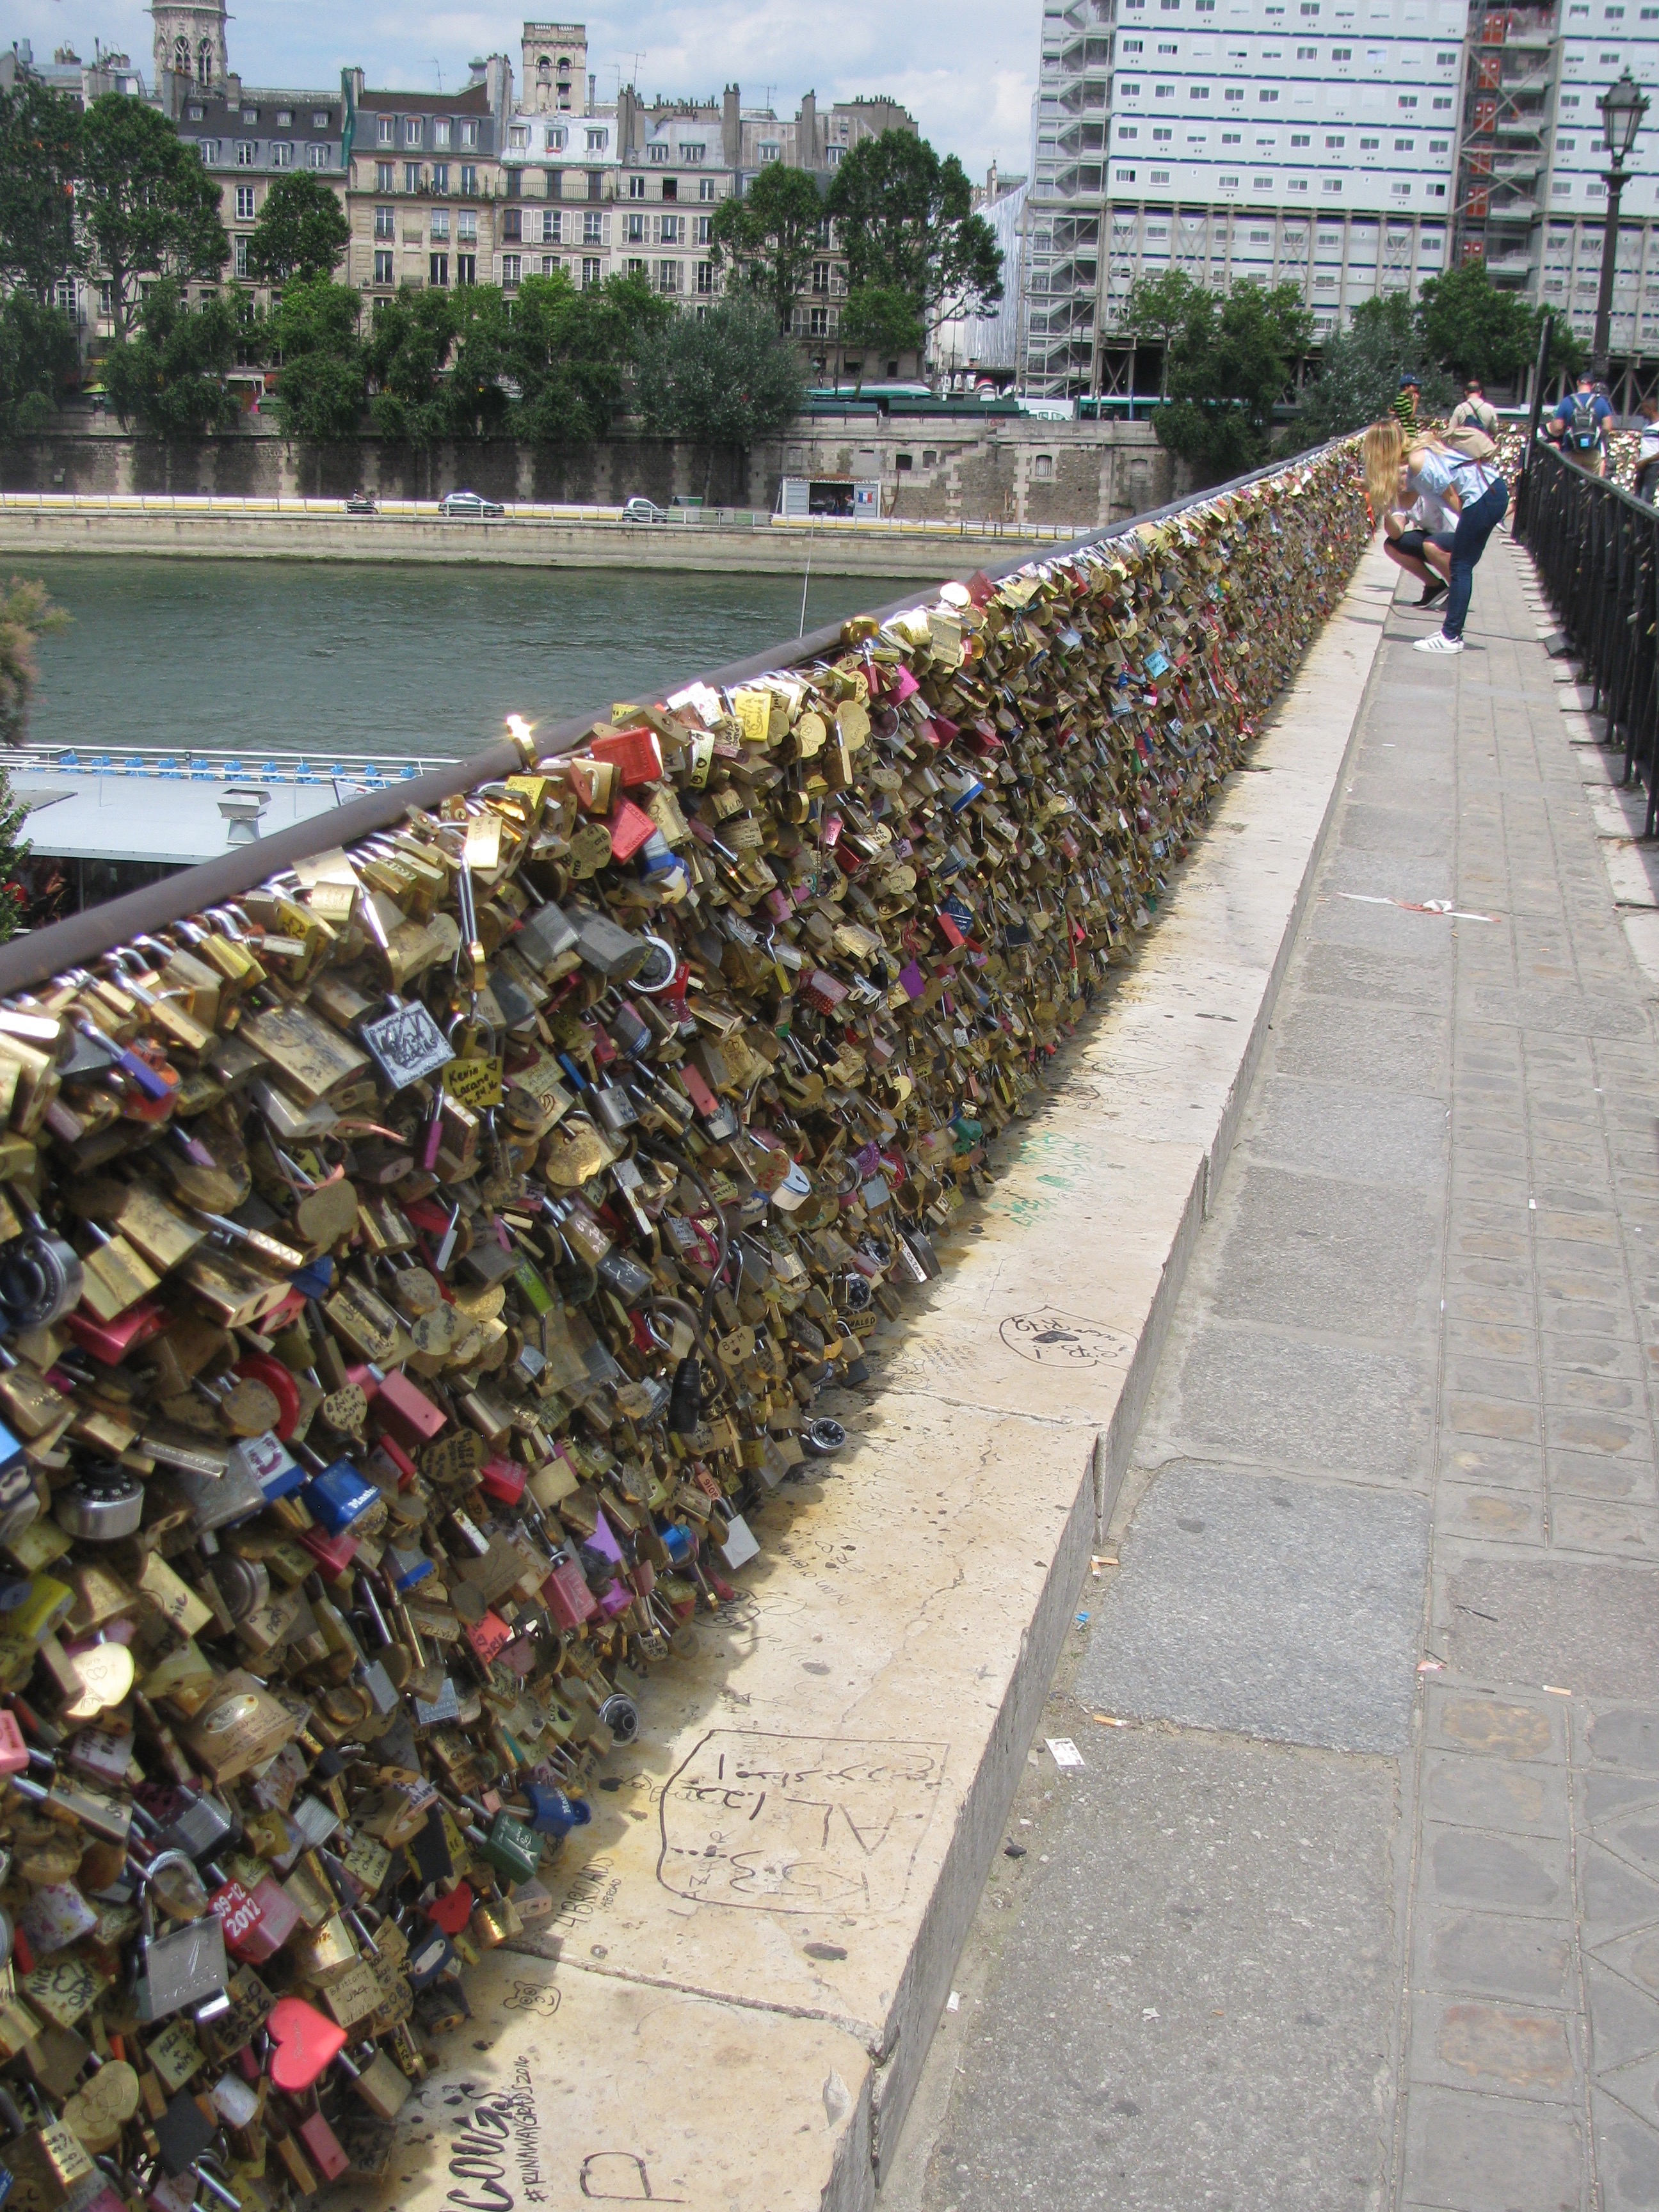 Pont des Arts love locks 